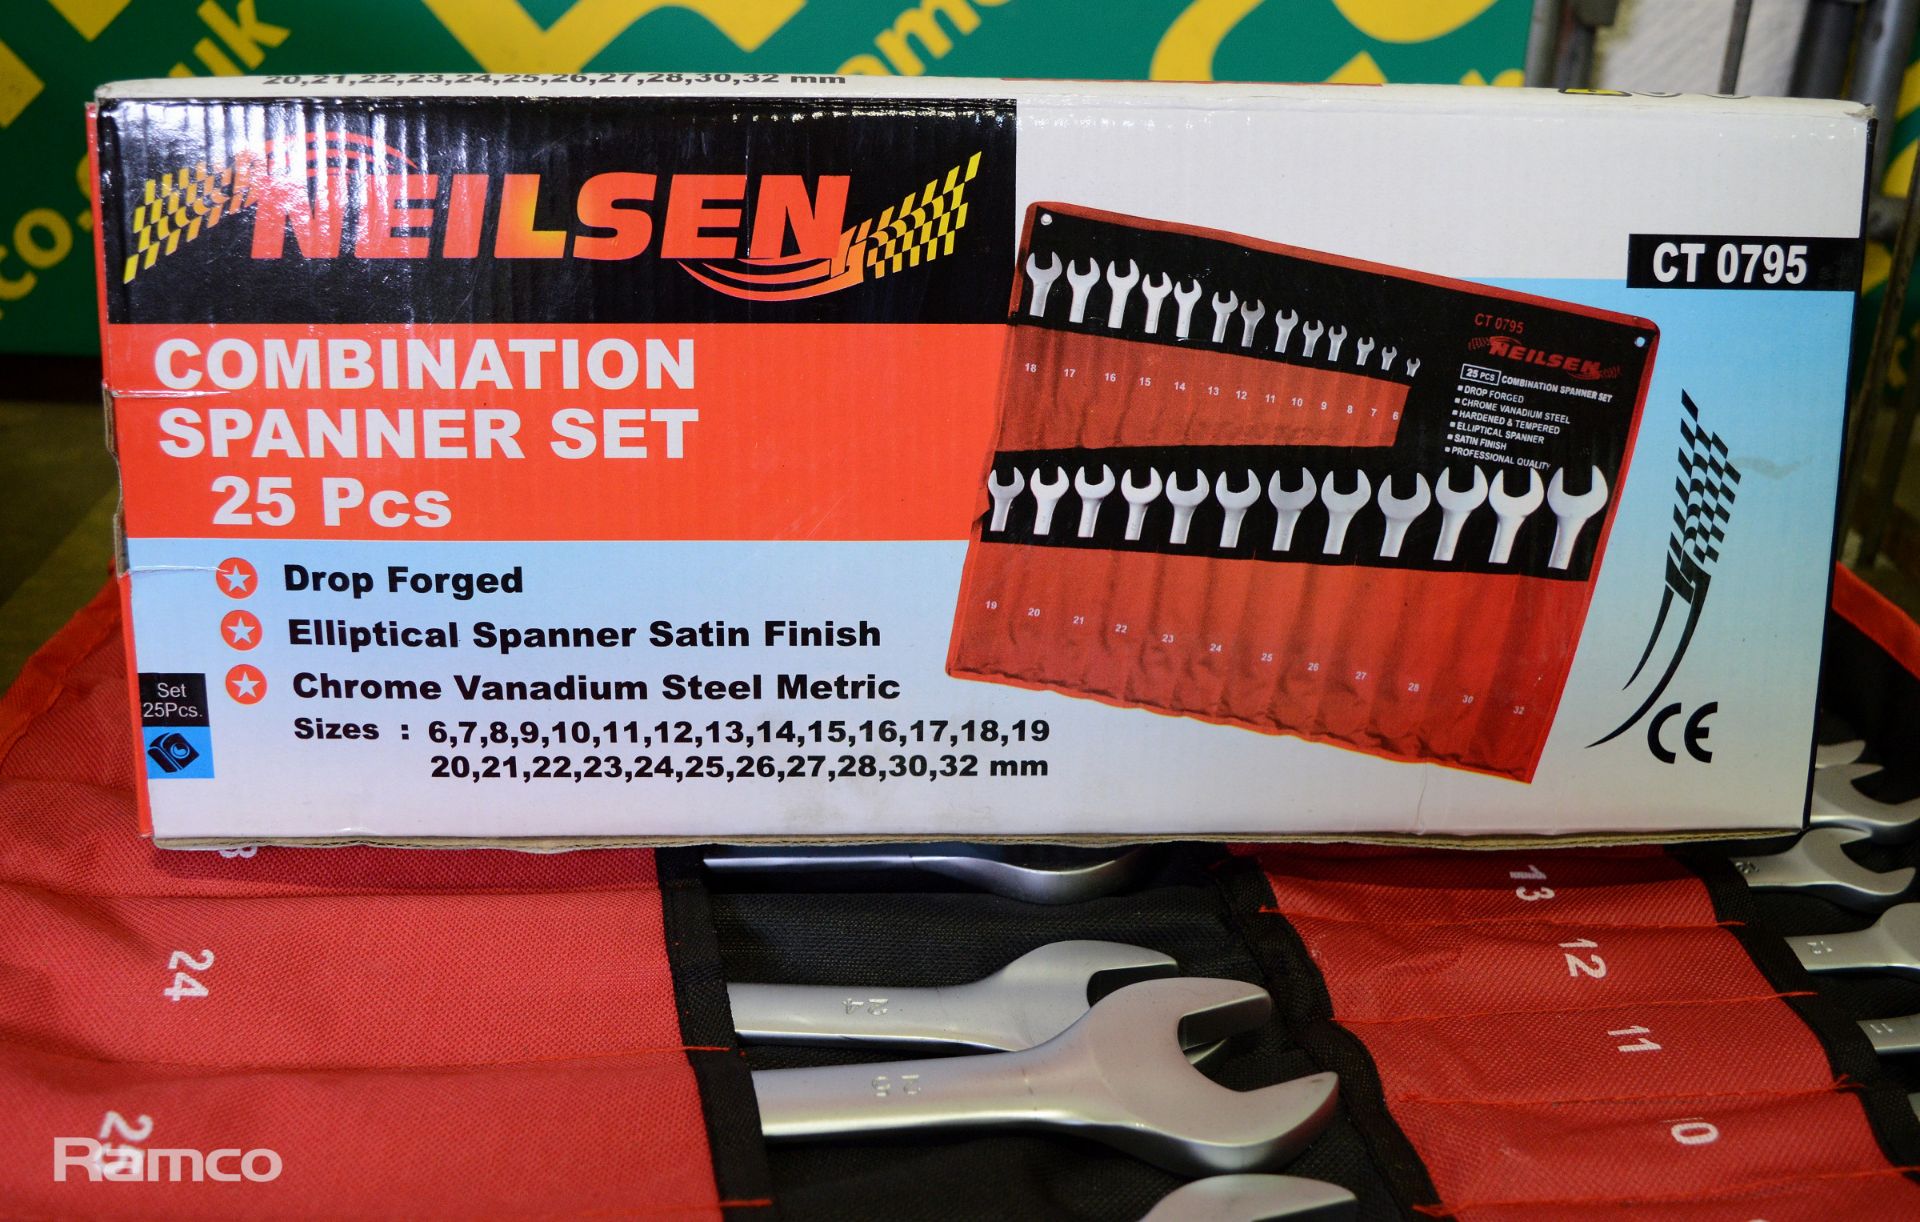 Neilsen combination 25 spanner set - Image 2 of 2